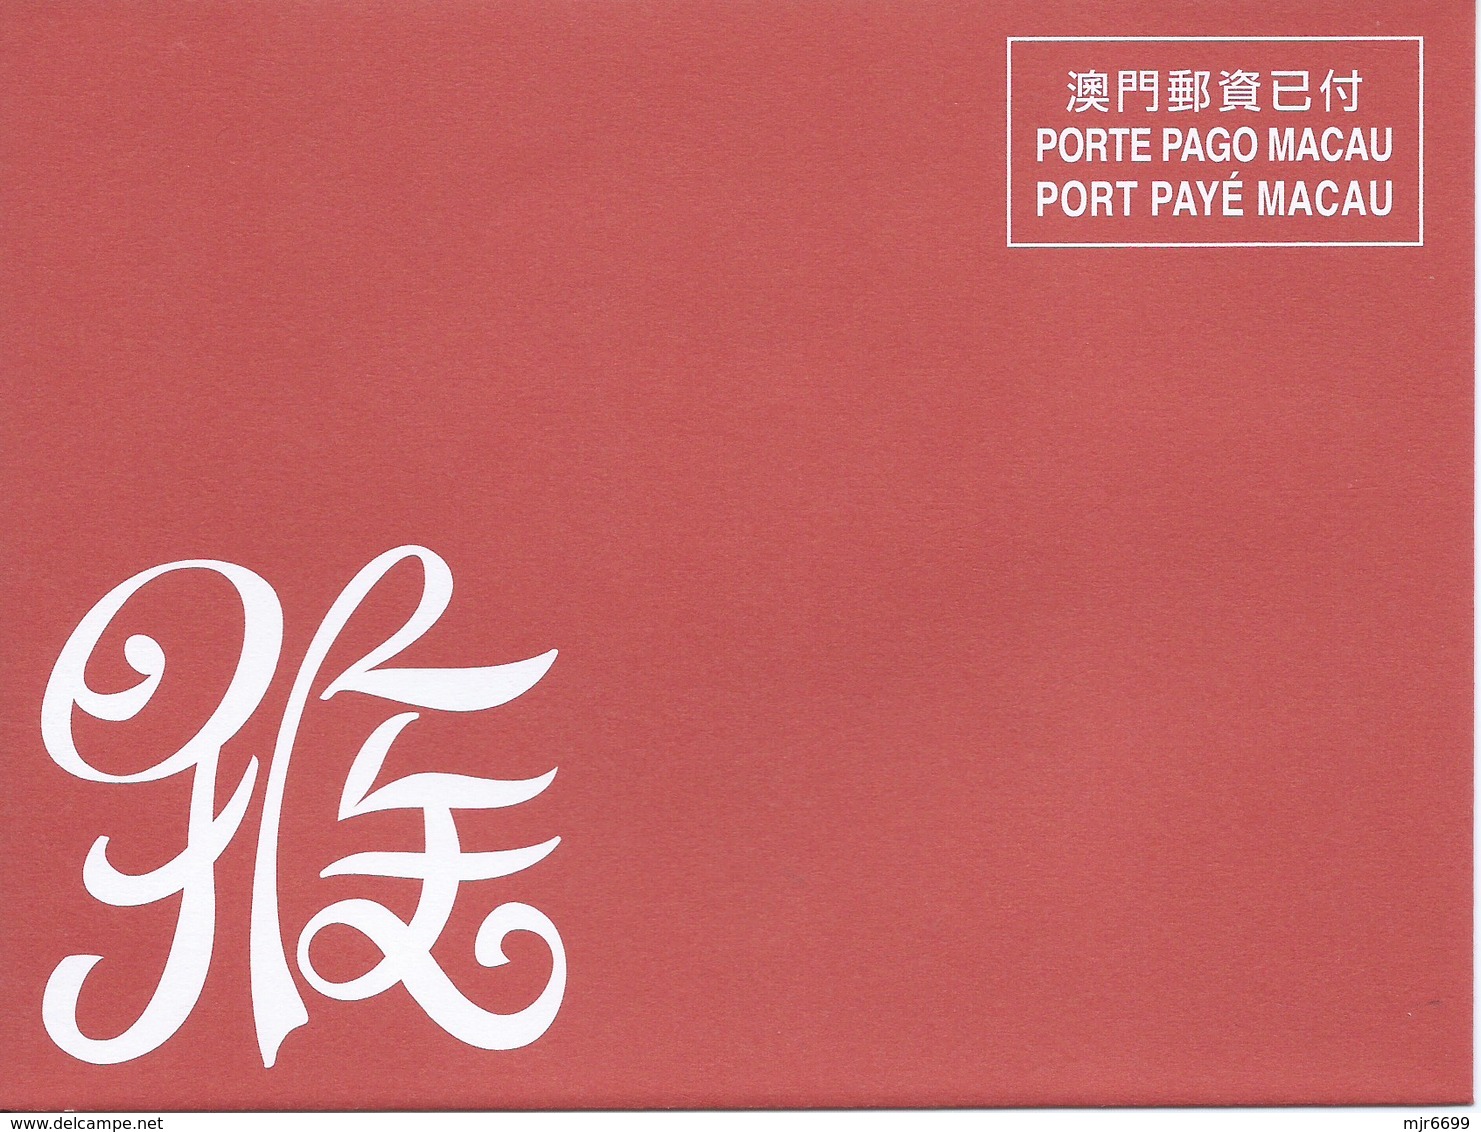 MACAU 2016 LUNAR YEAR OF THE MONKEY GREETING CARD & POSTAGE PAID COVER - Postal Stationery